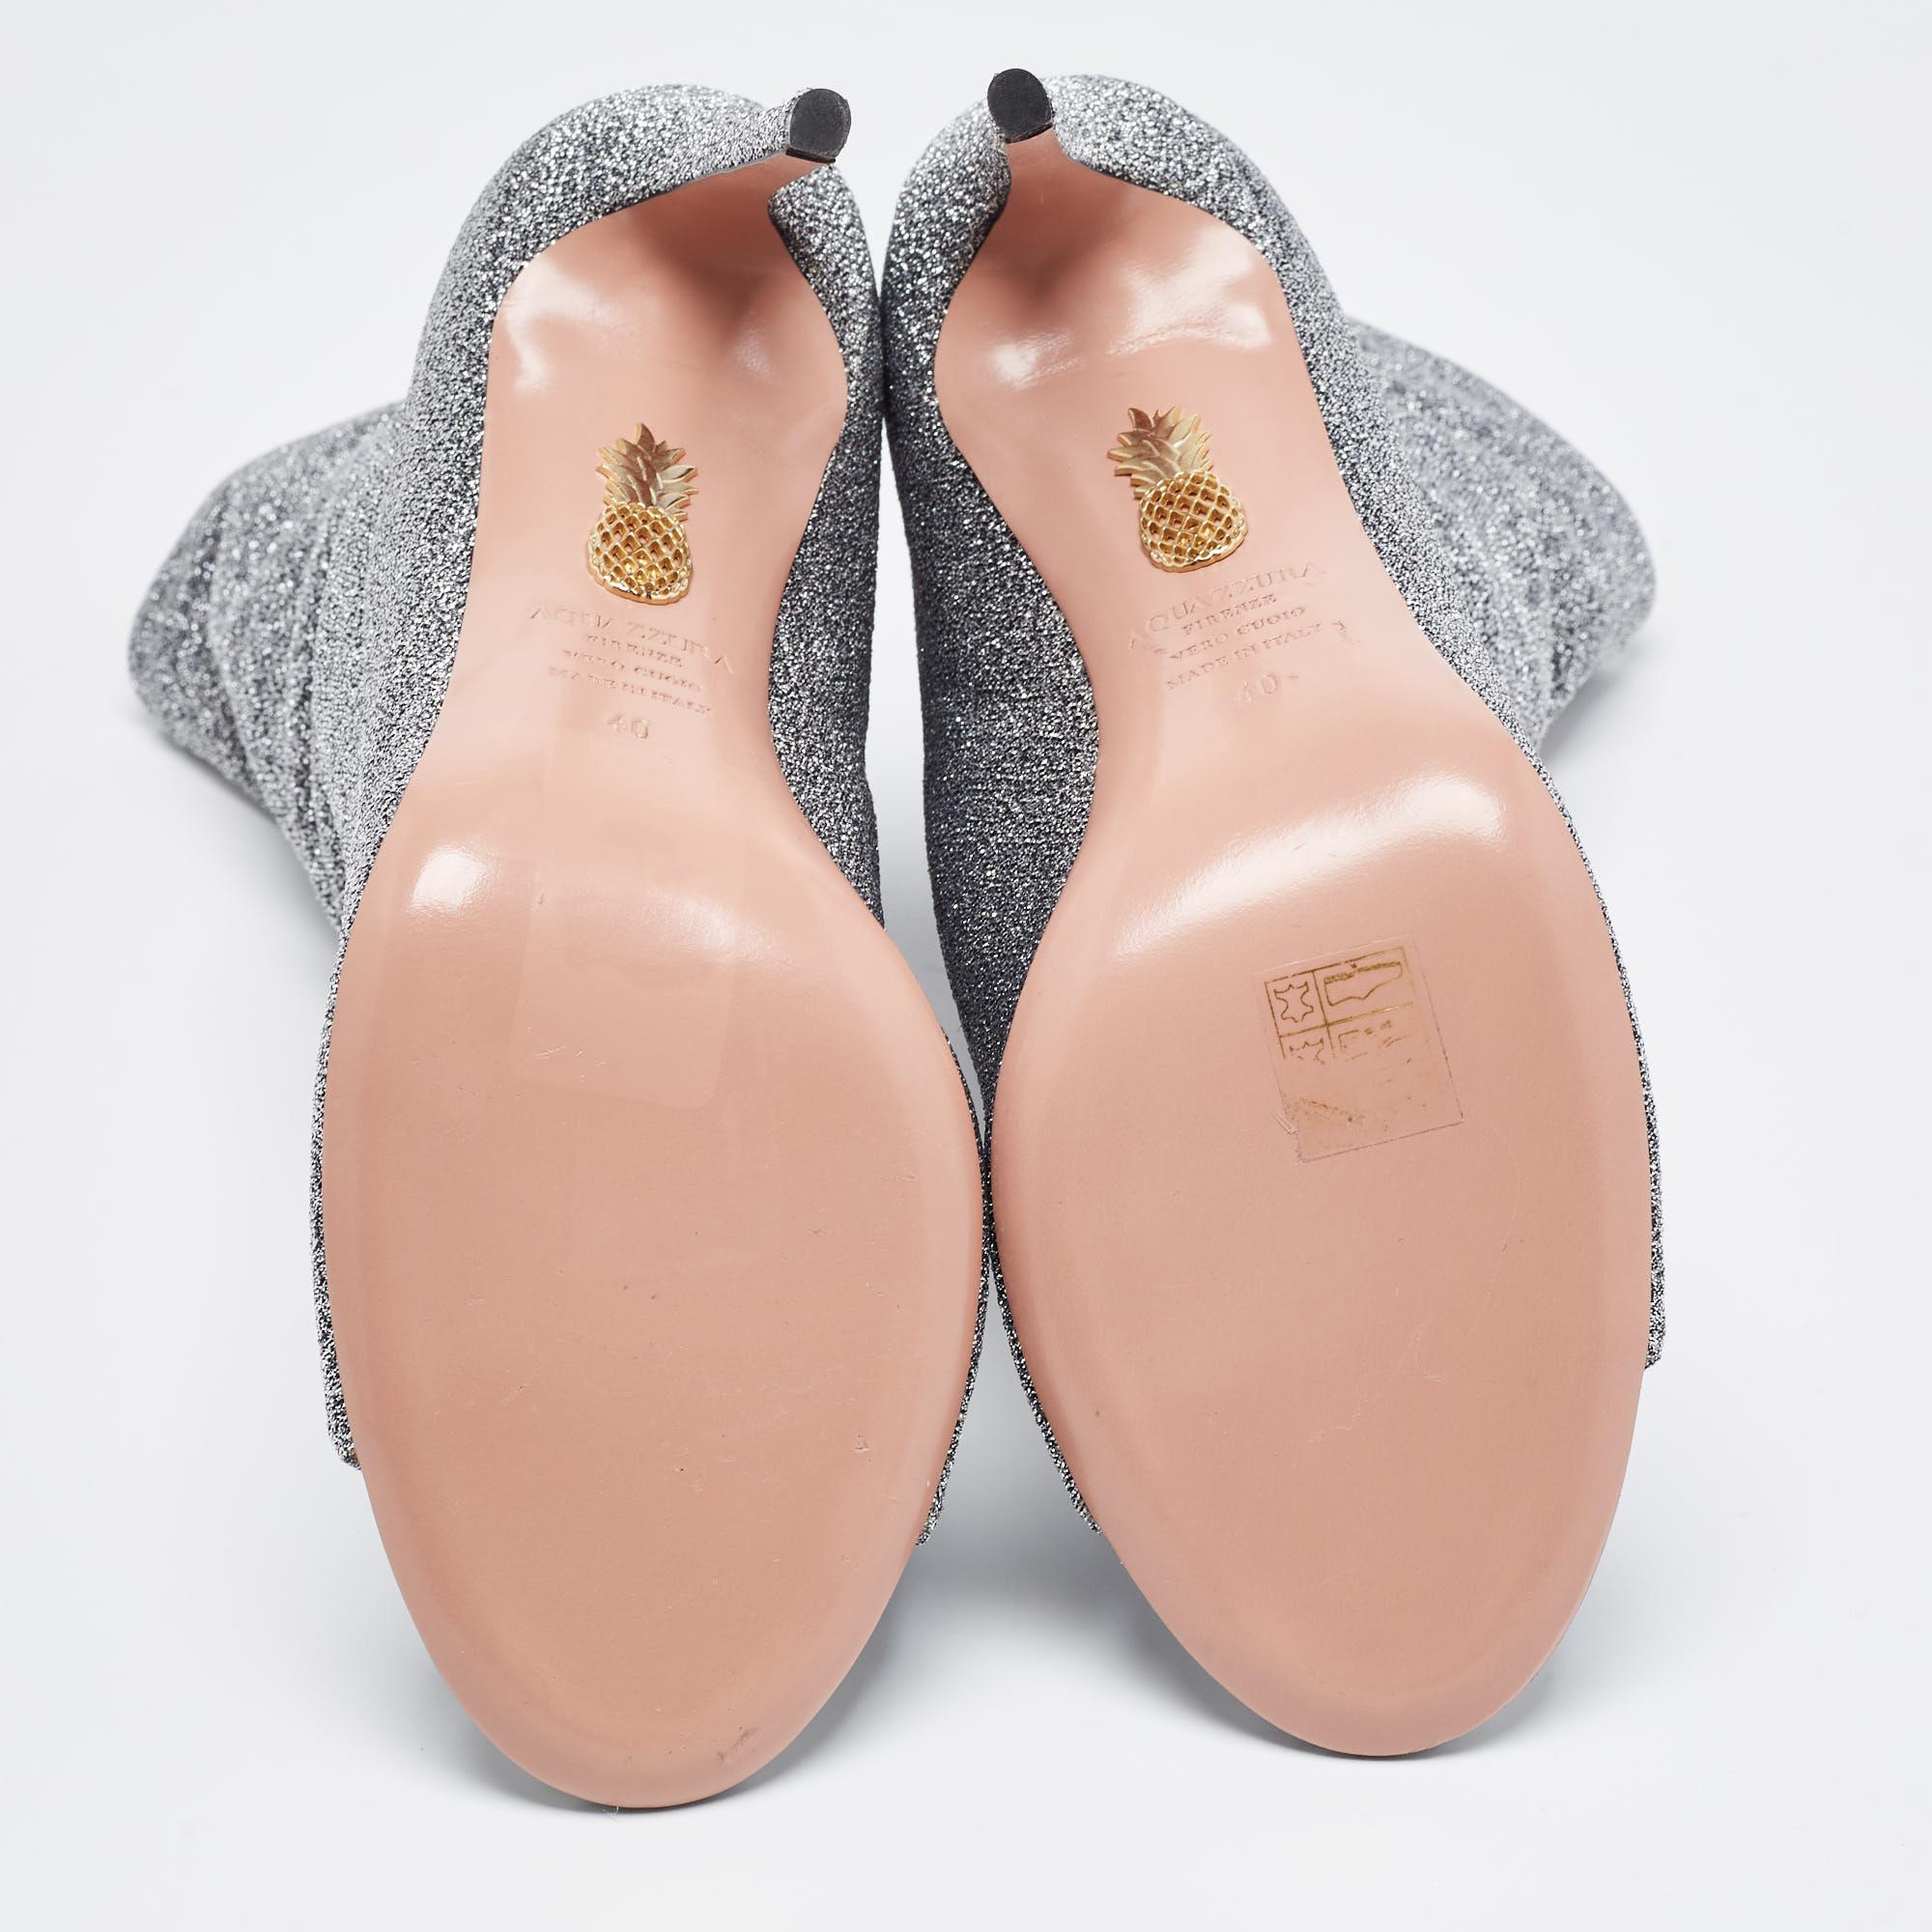 Aquazzura Silver Lurex Fabric Eclair Peep Toe Ankle Boots Size 40